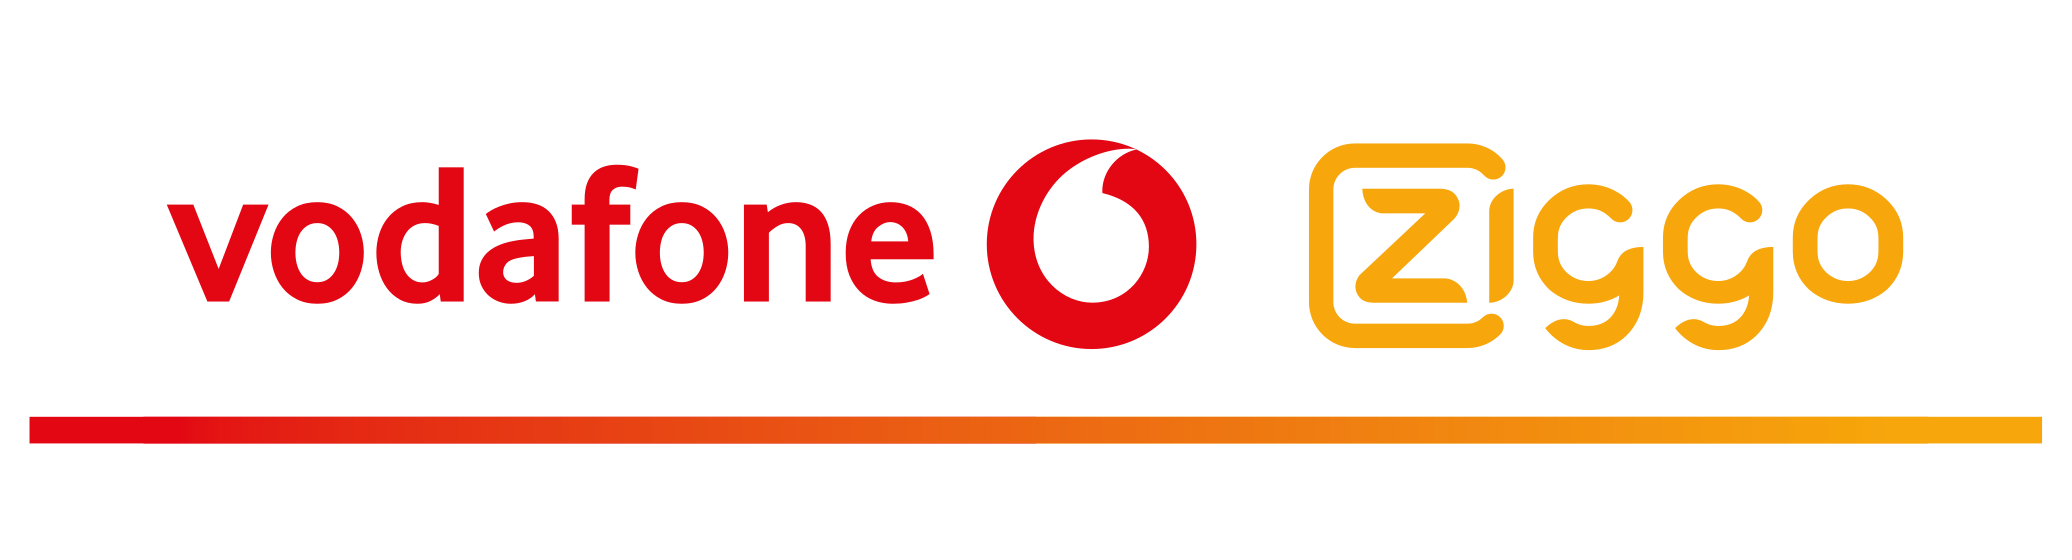 vodafone ziggo logo